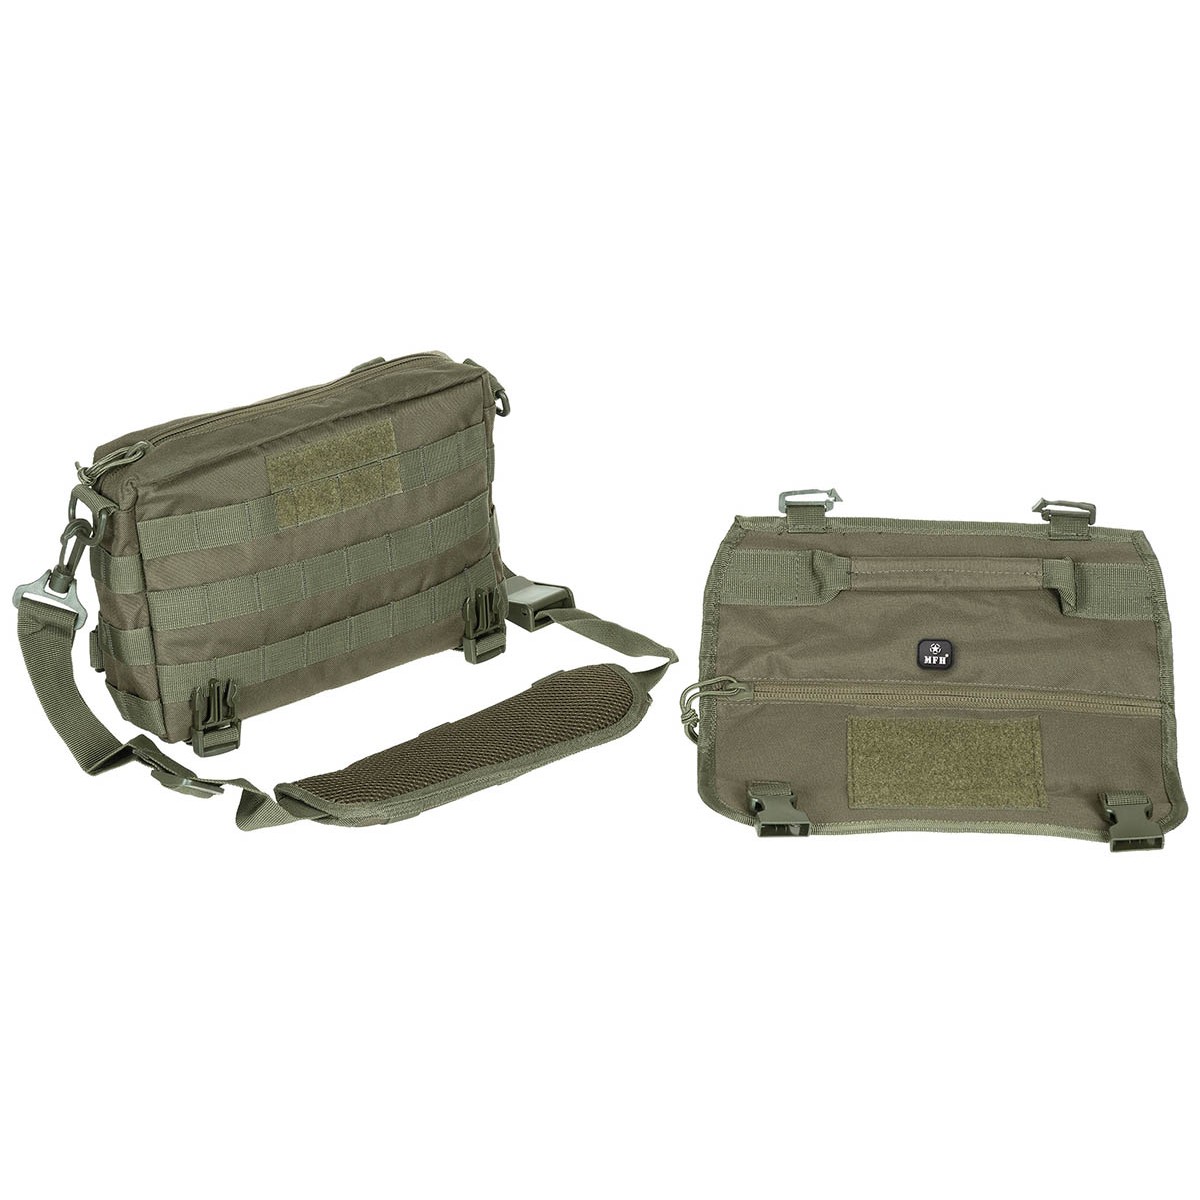 EDC torbica, ledvena torbica, pasna torbica, MILTEC, MIL-TEC, B33 Tactical, B33 army shop, trgovina z vojaško opremo, vojaška trgovina, outdoor oprema